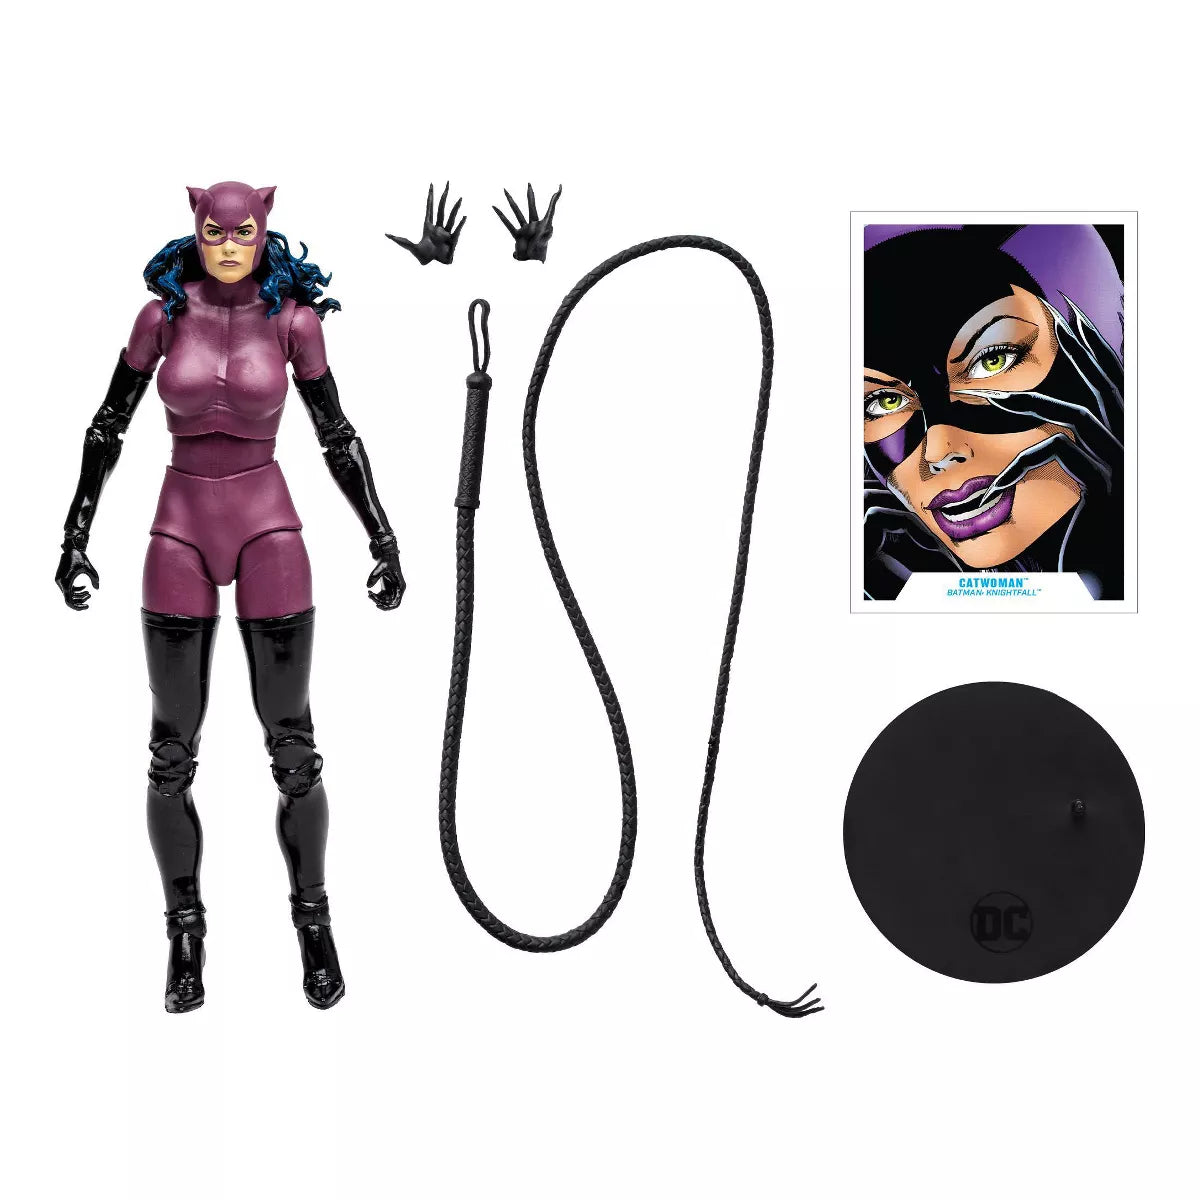 DC Comics Multiverse Batman: Knightfall - Catwoman Action Figure